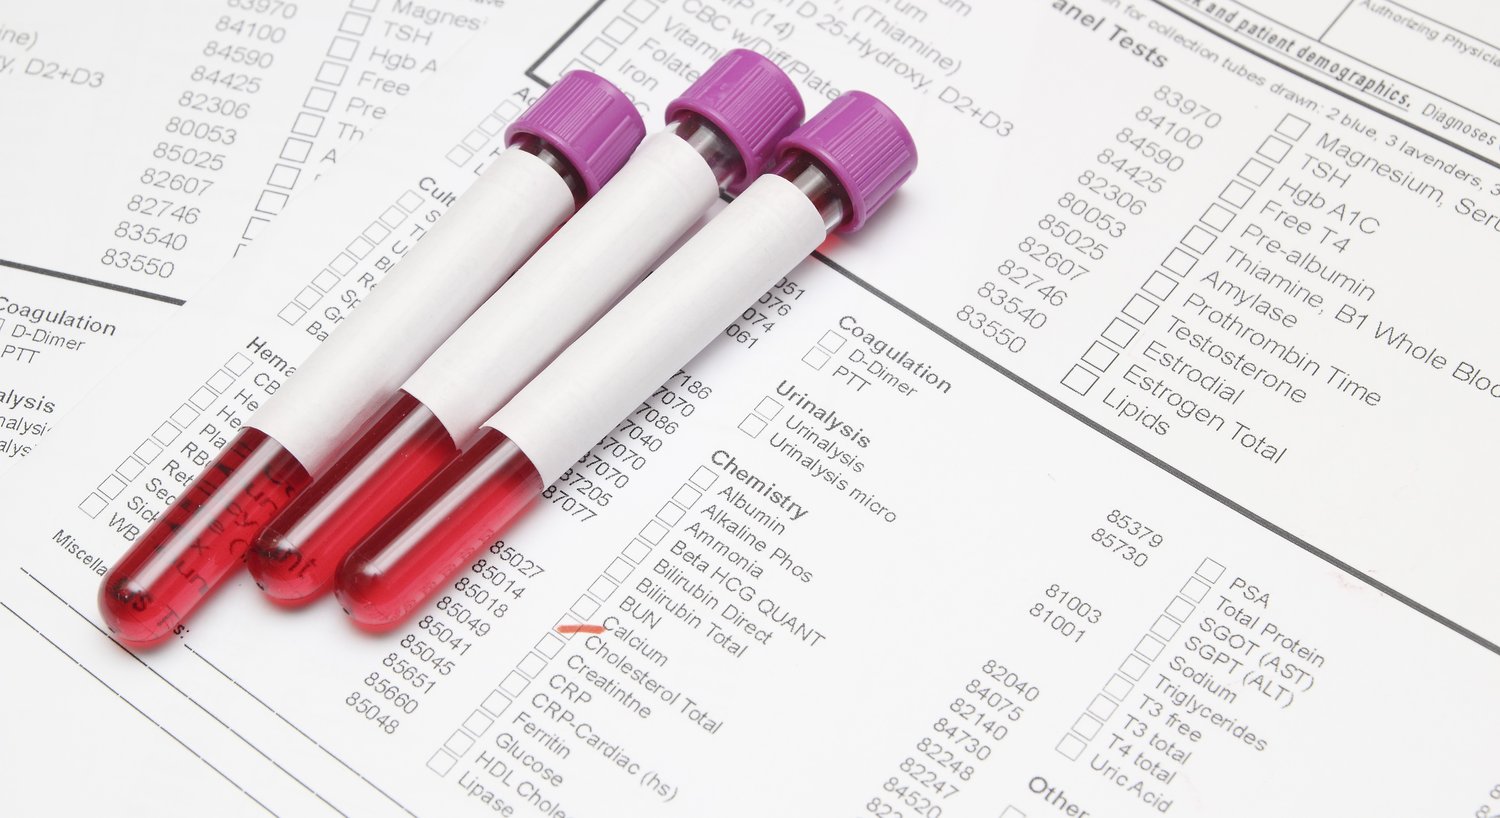 14NOV19 Blood sample stock image-1-1